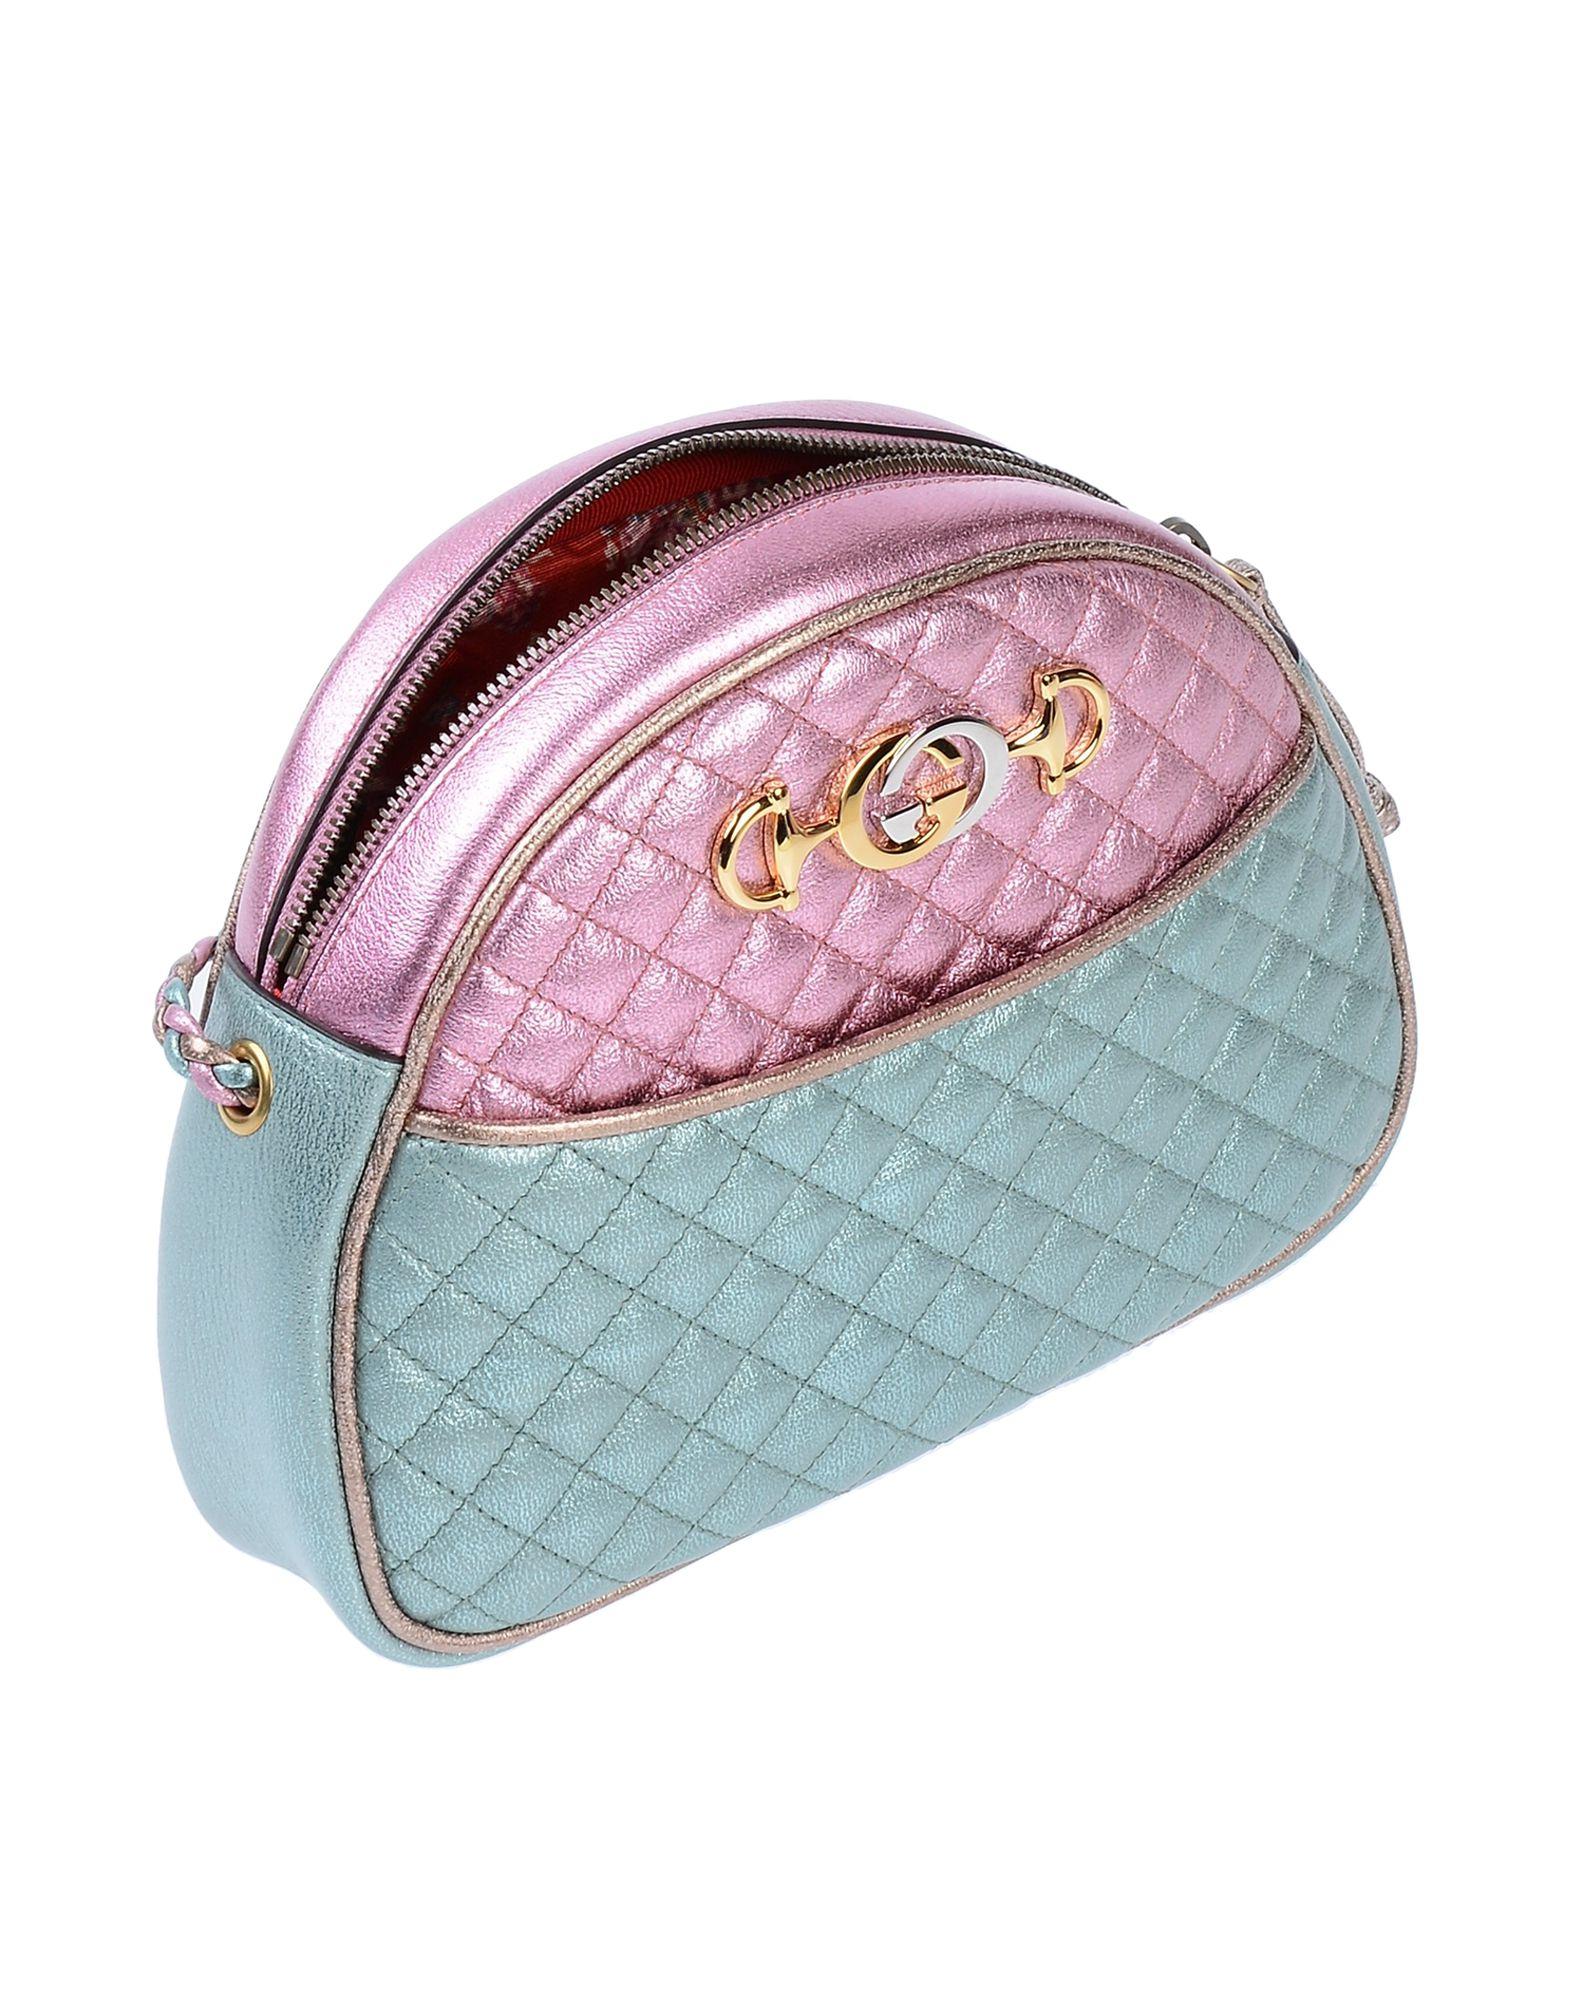 Gucci Cross-body Bag in Pink - Lyst